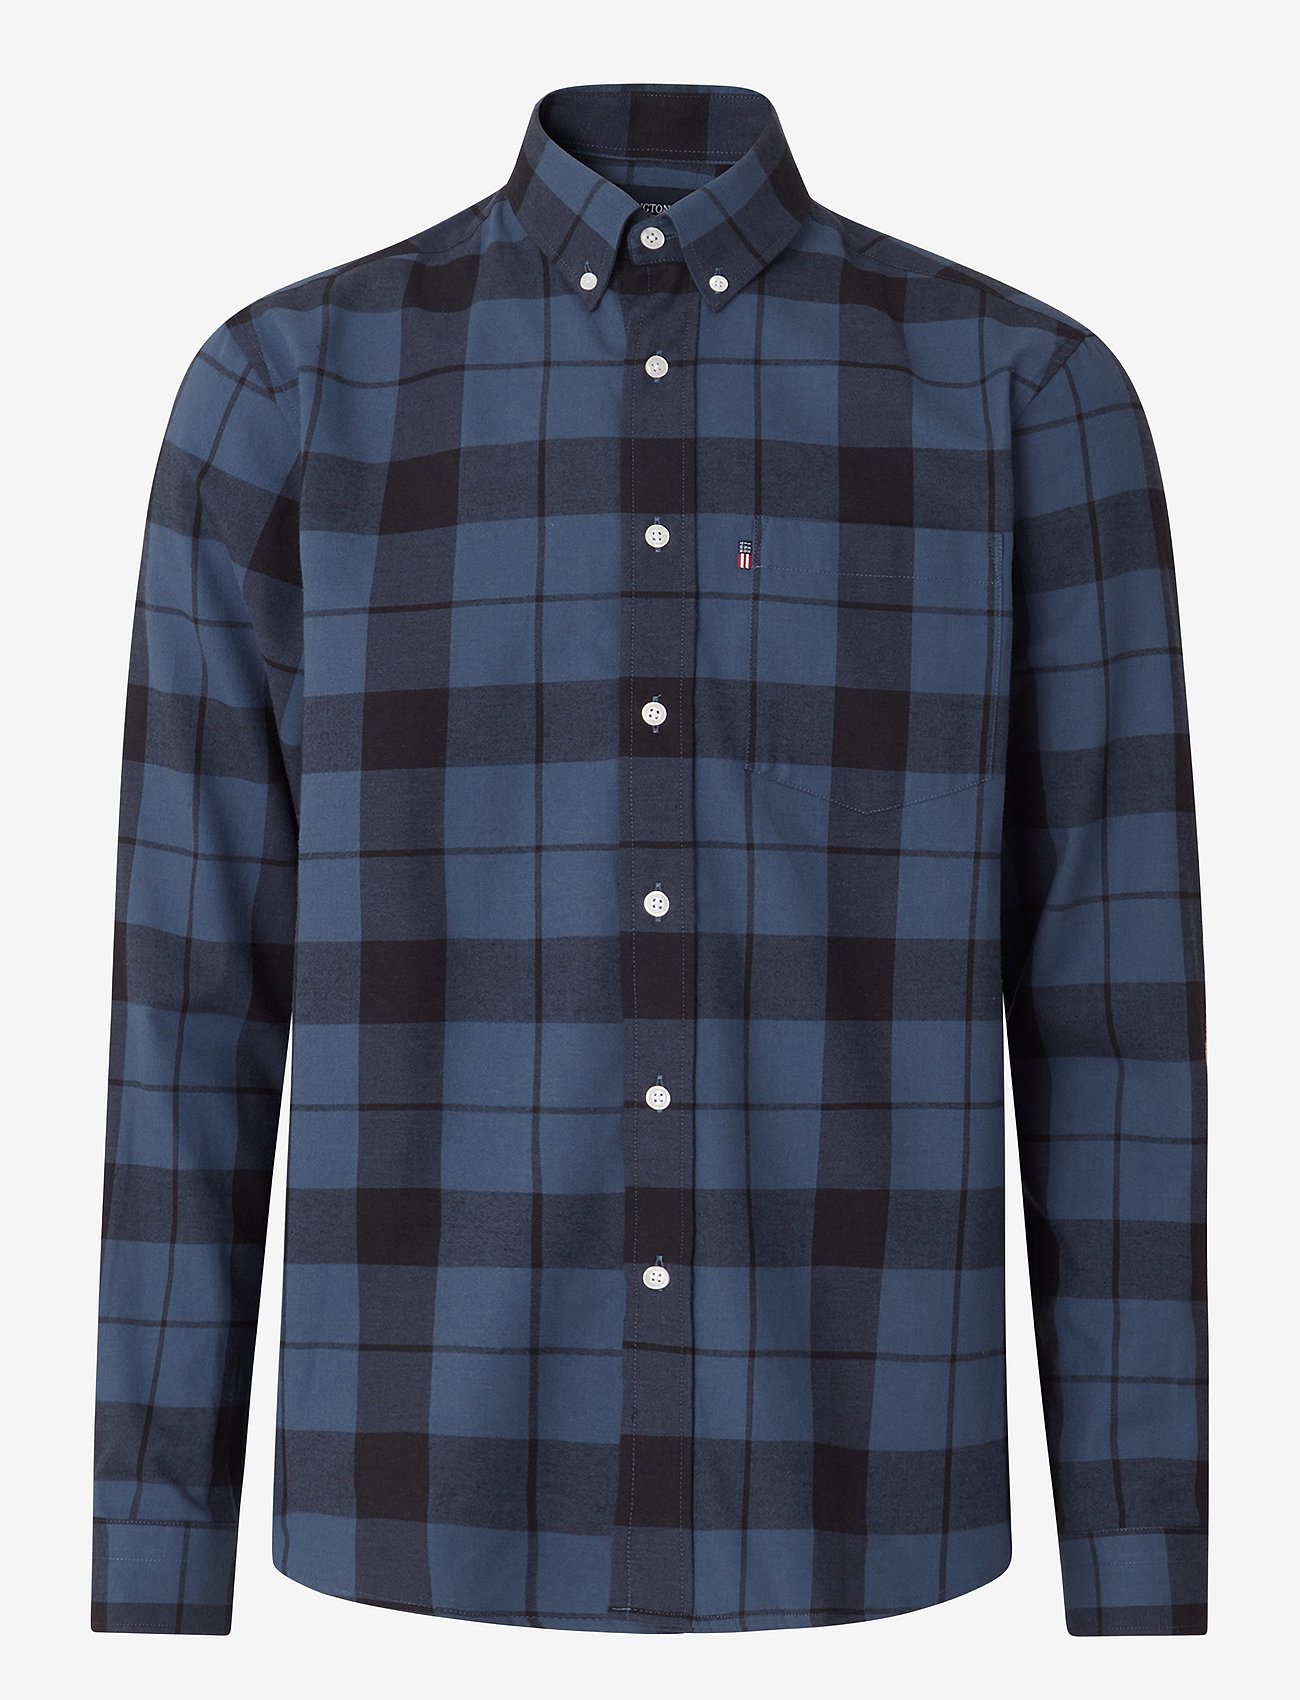 Lexington Clothing - Casual Check Flannel B.D Shirt - casual shirts - blue multi check - 0